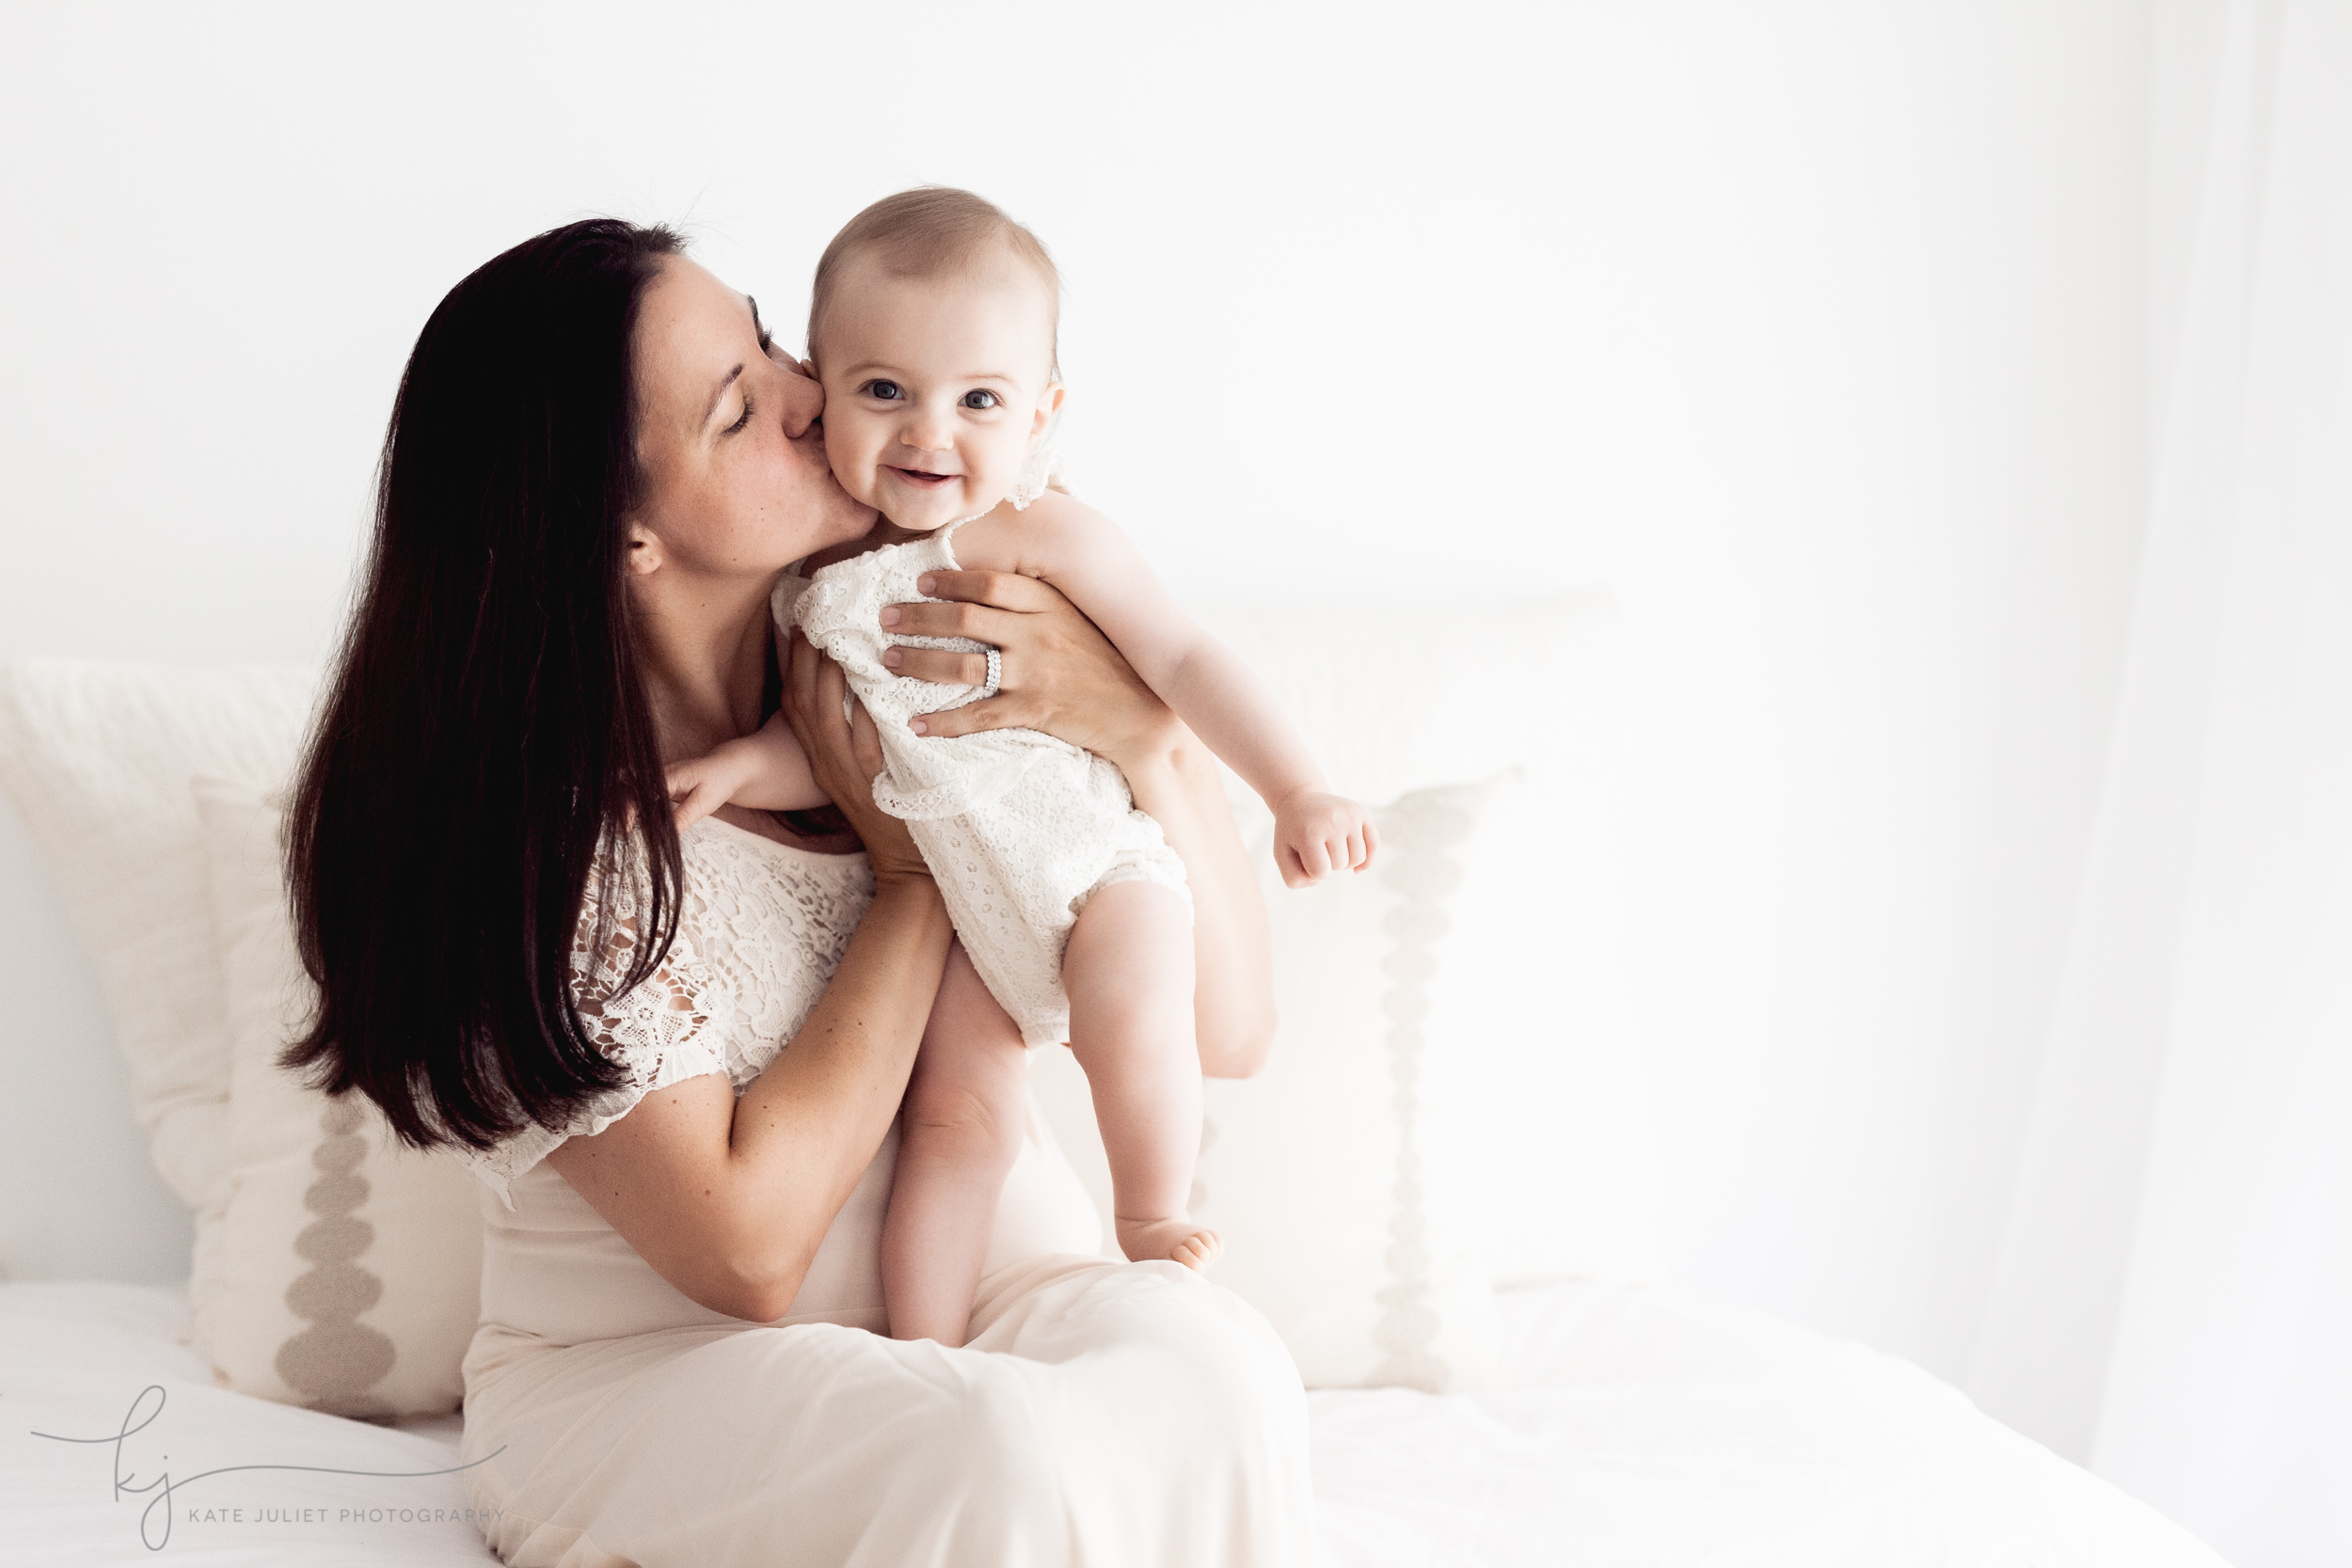 Arlington VA Baby Photographer | Kate Juliet Photography